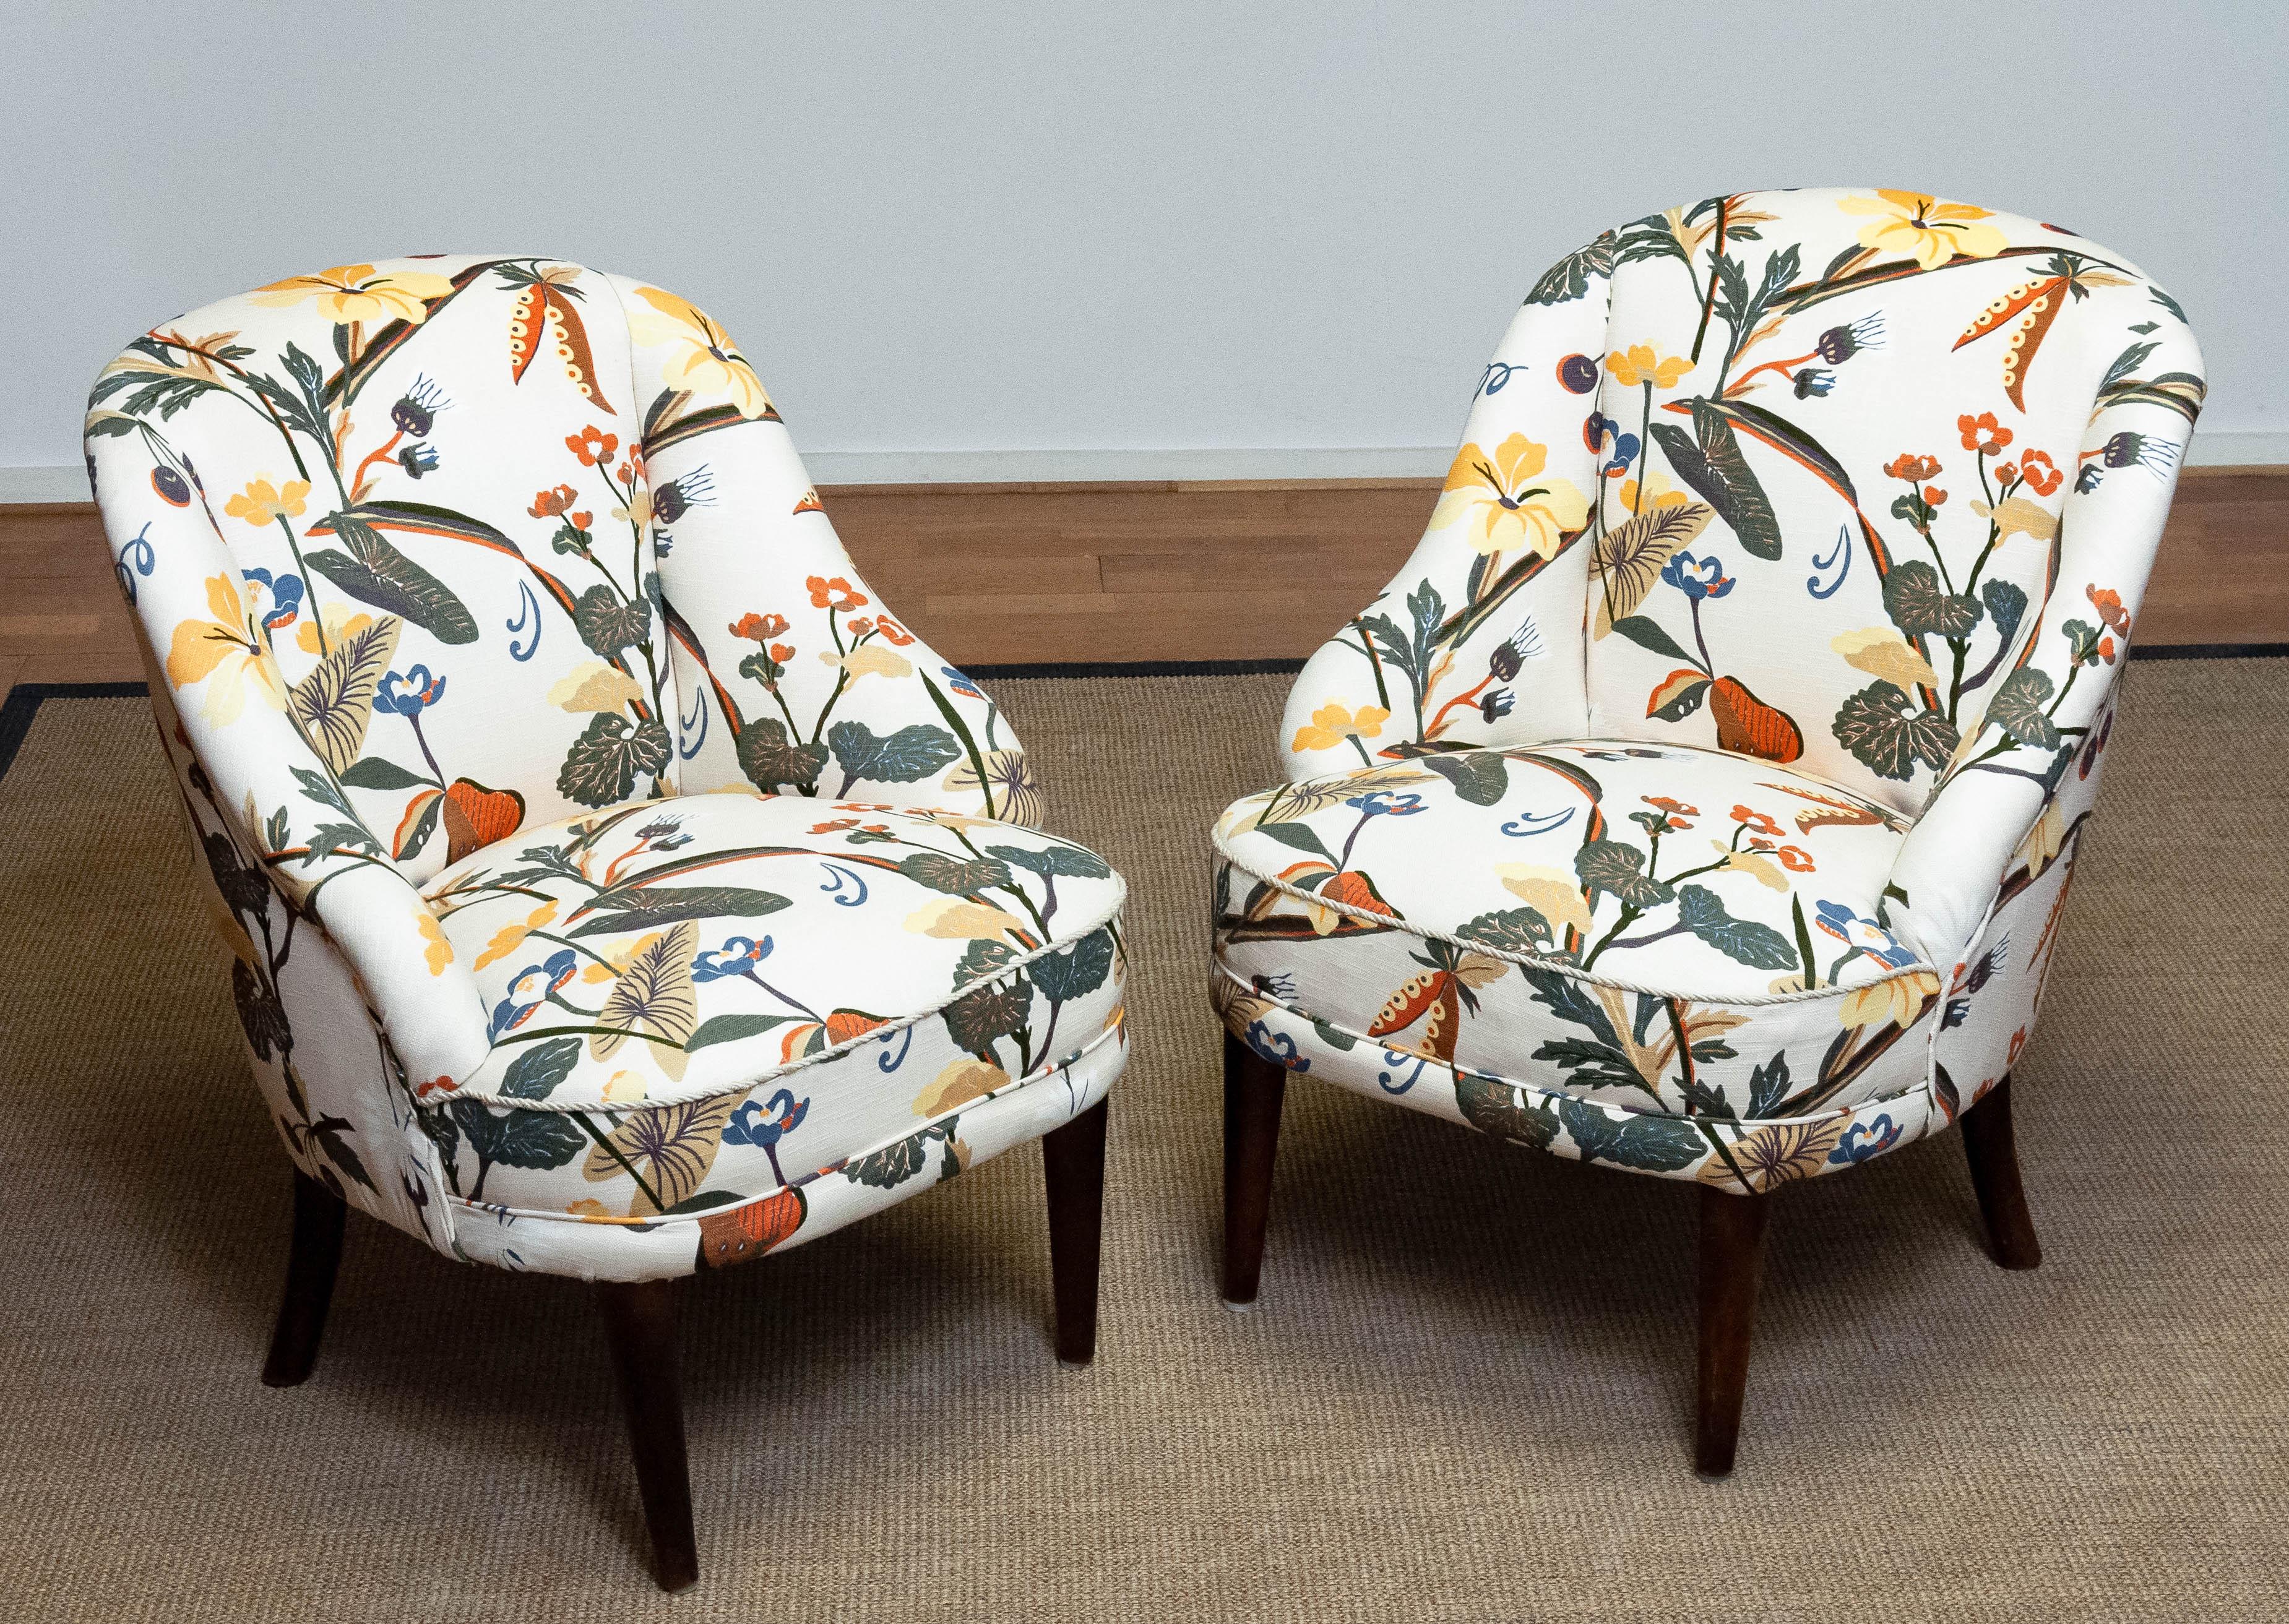 1940s Floral Printed Linen, J. Frank Style, New Upholstered Danish Slipper Chair For Sale 5